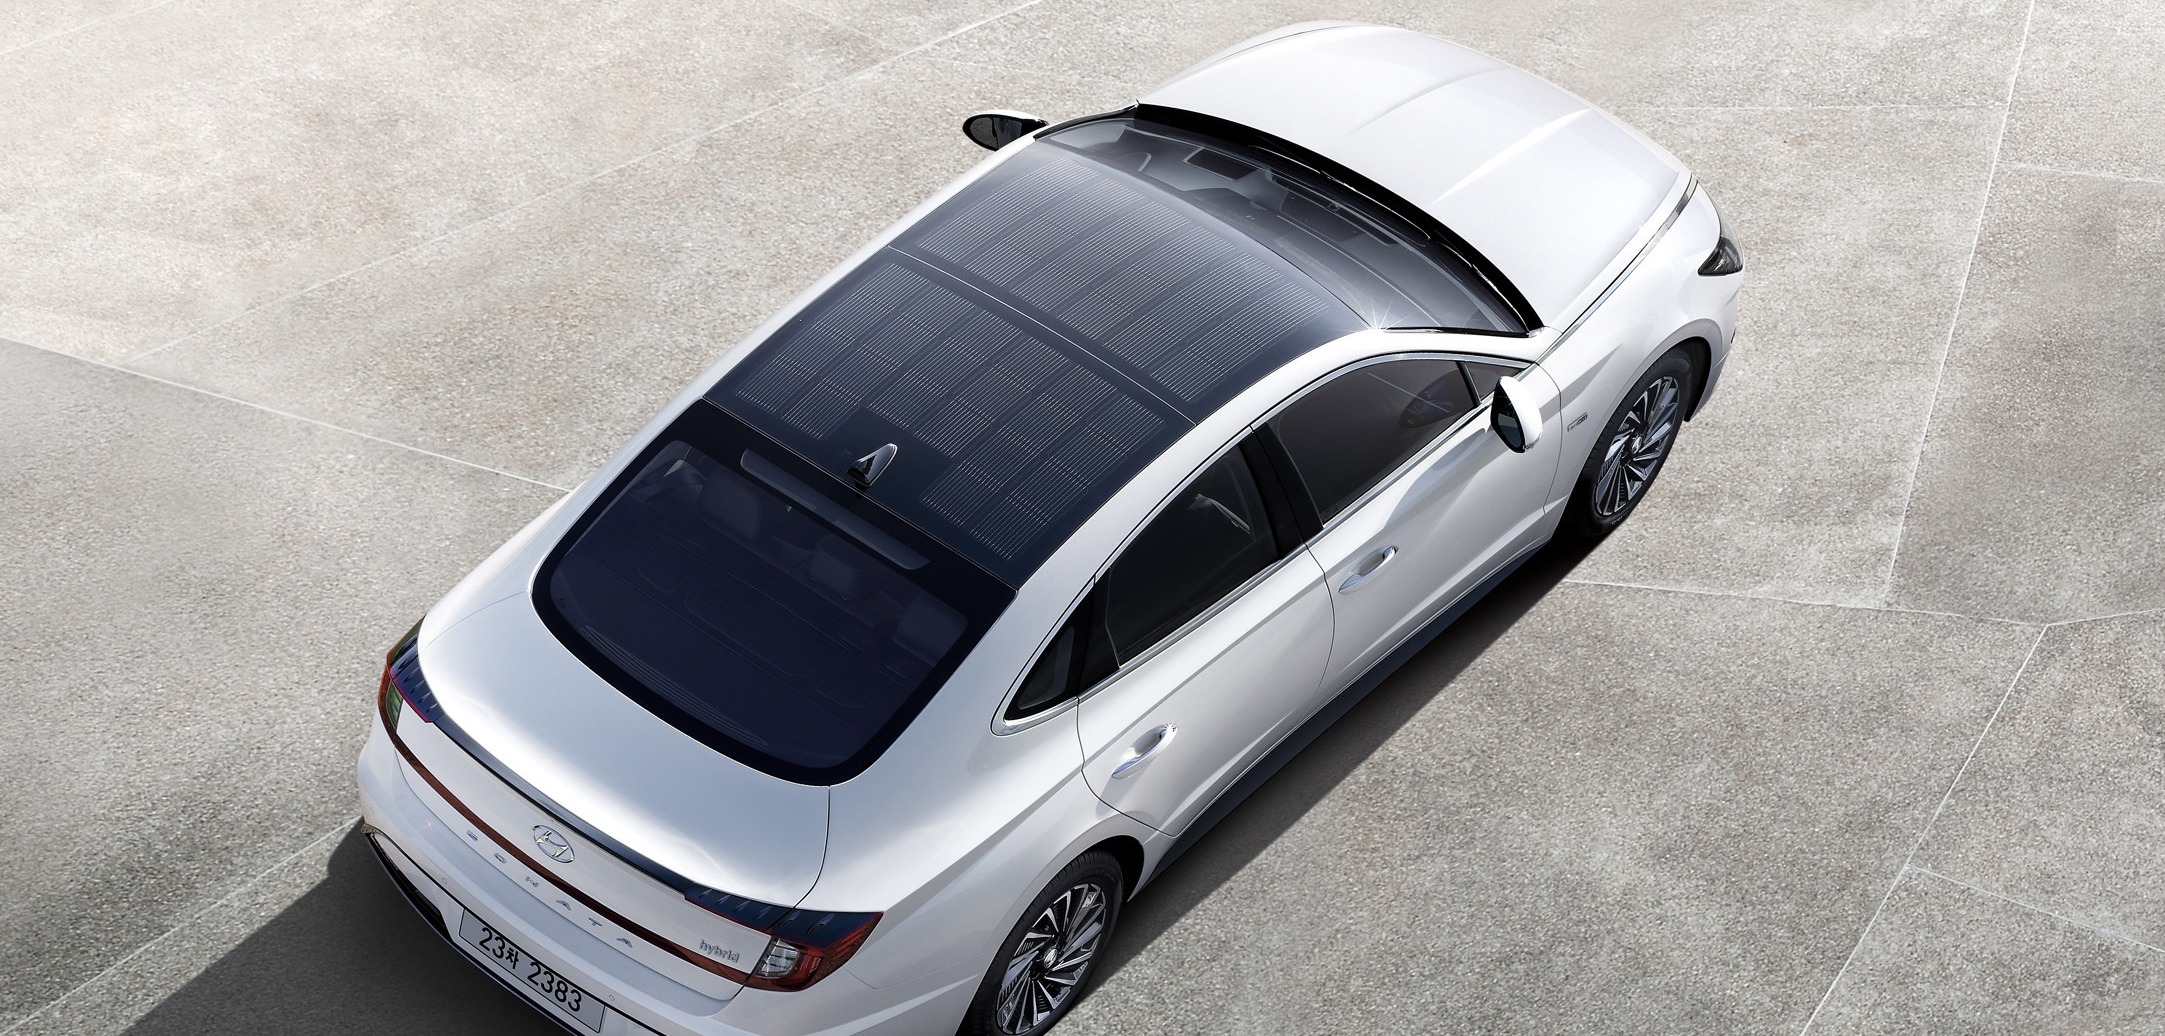 Hyundai launches solar-powered car - Electric & Hybrid Vehicle